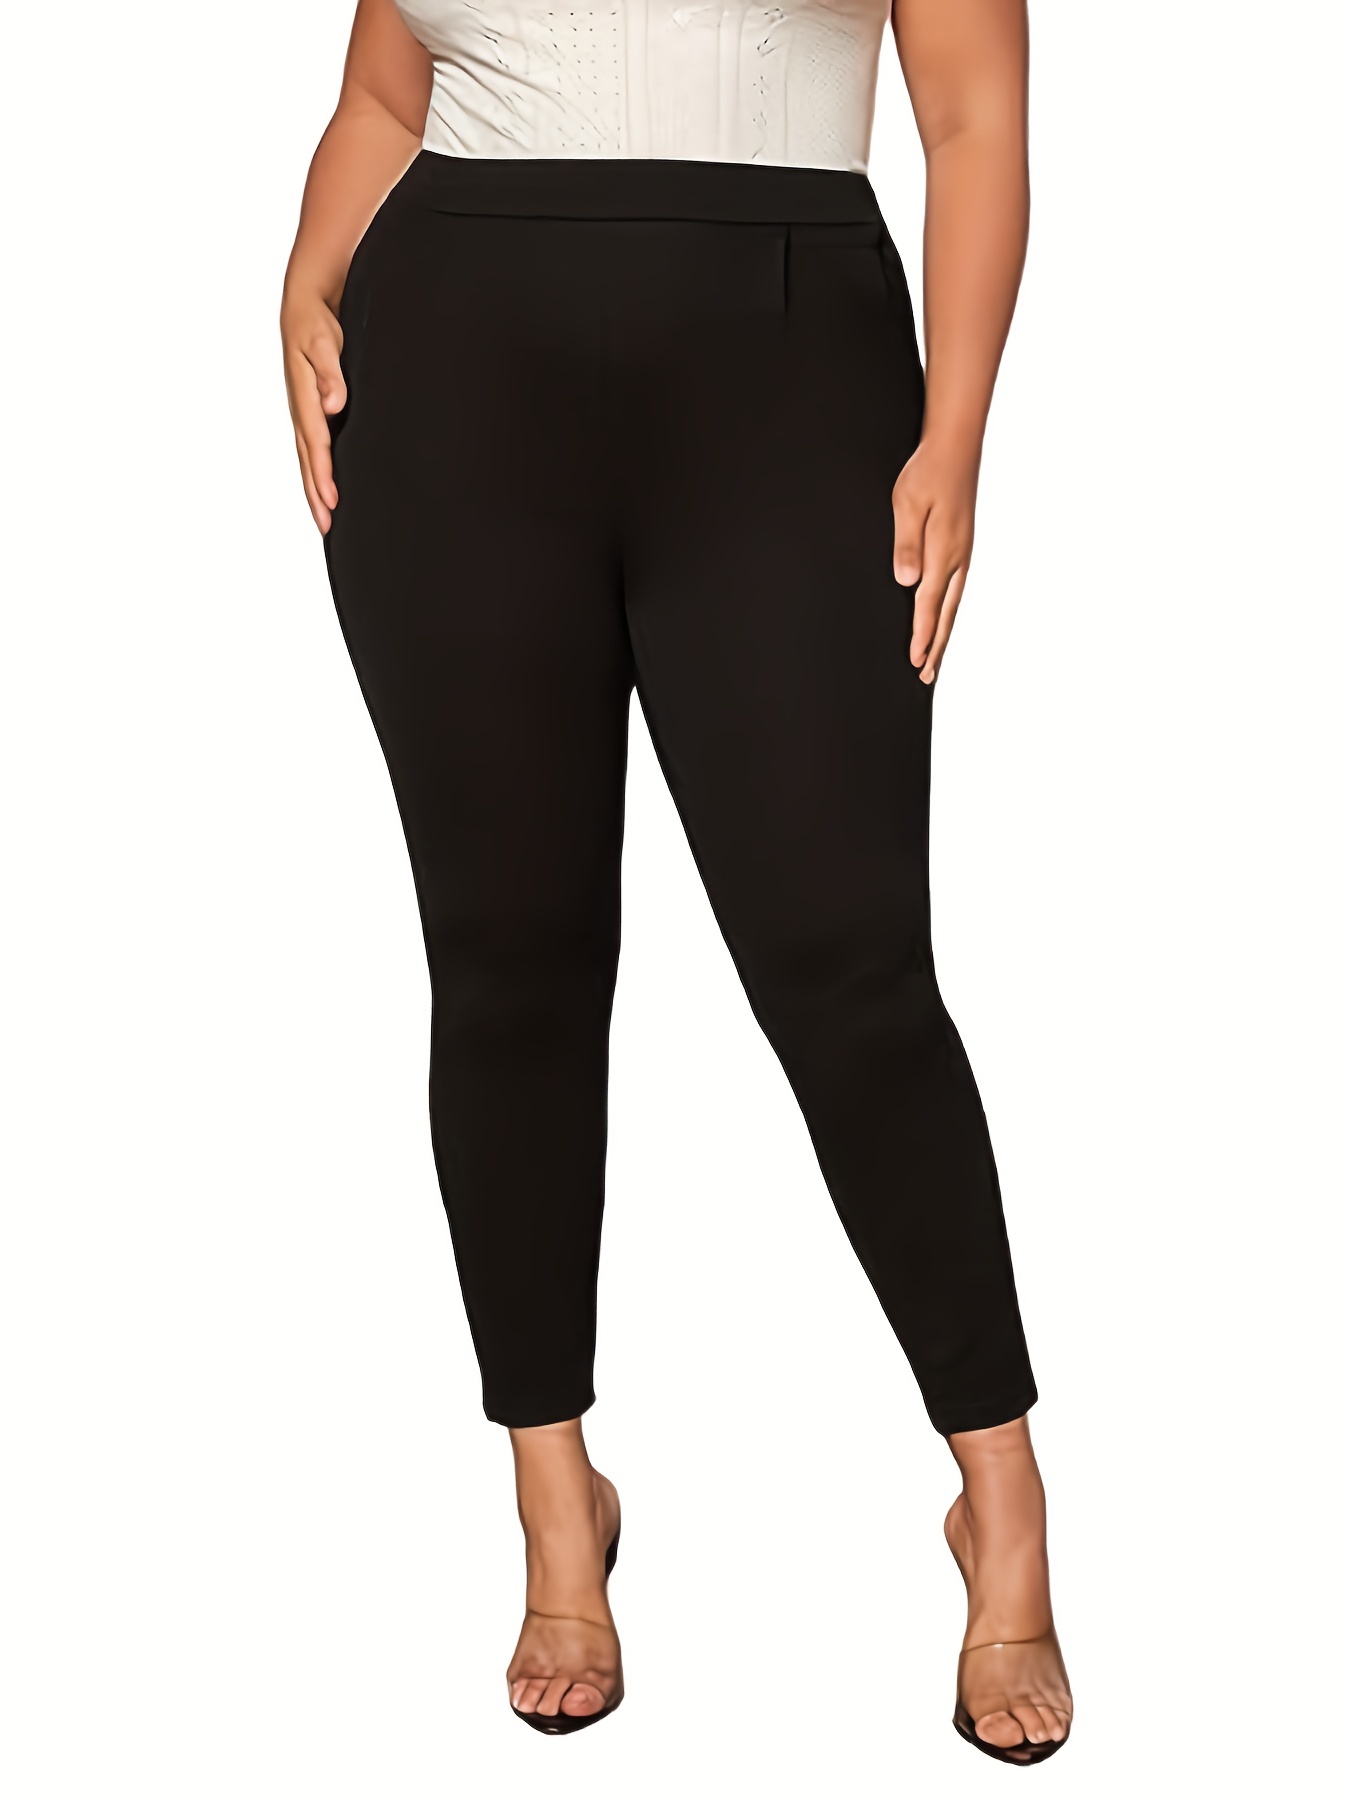 Women's Plus Size Suit Pants Black Plain Tapered/Carrot 